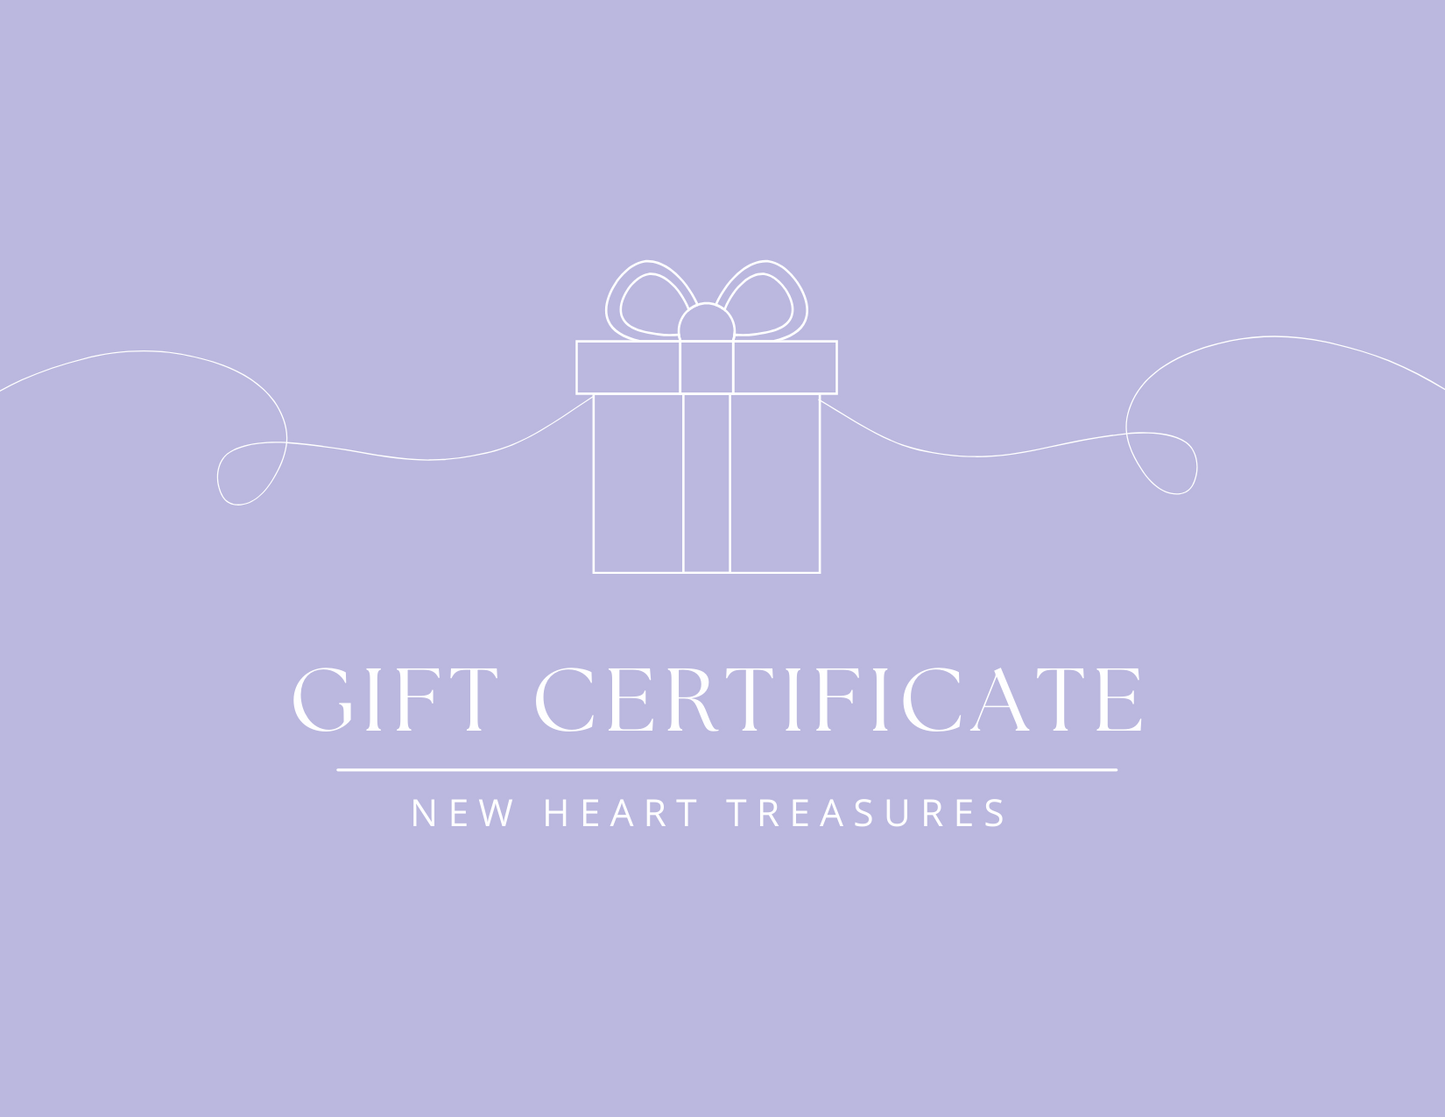 New Heart Treasures Gift Certificate